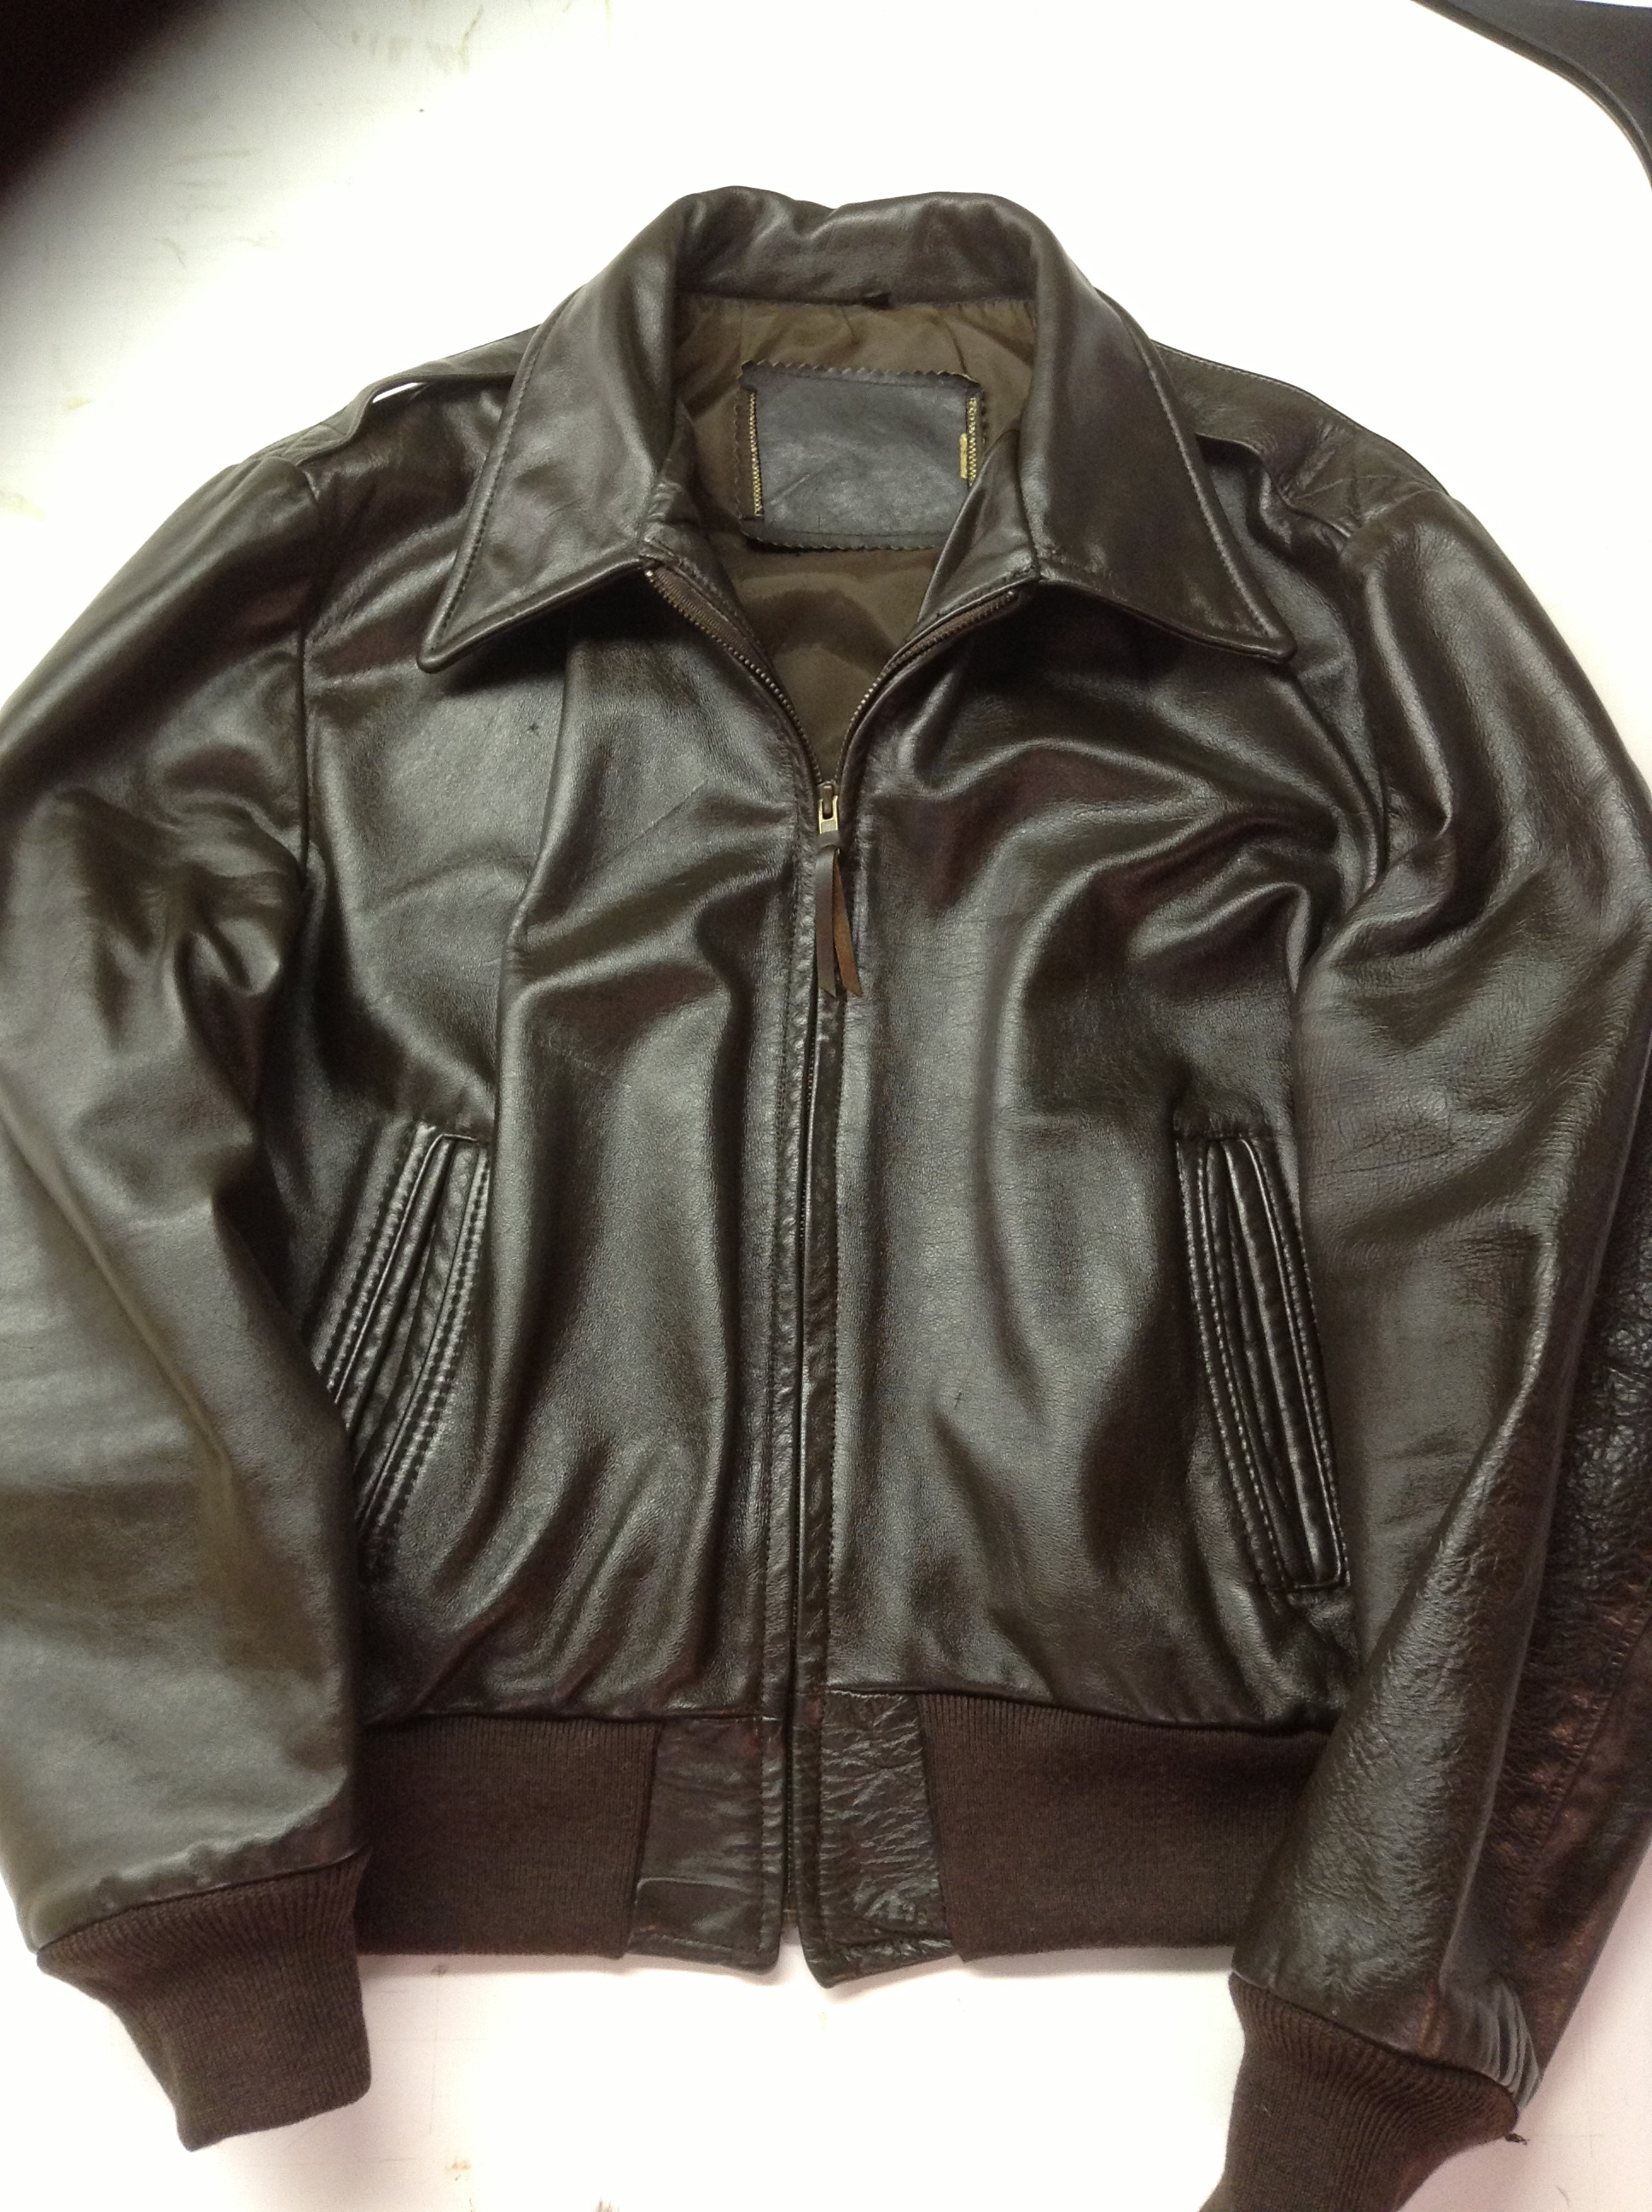 Leather jacket repair/restoration | The Fedora Lounge